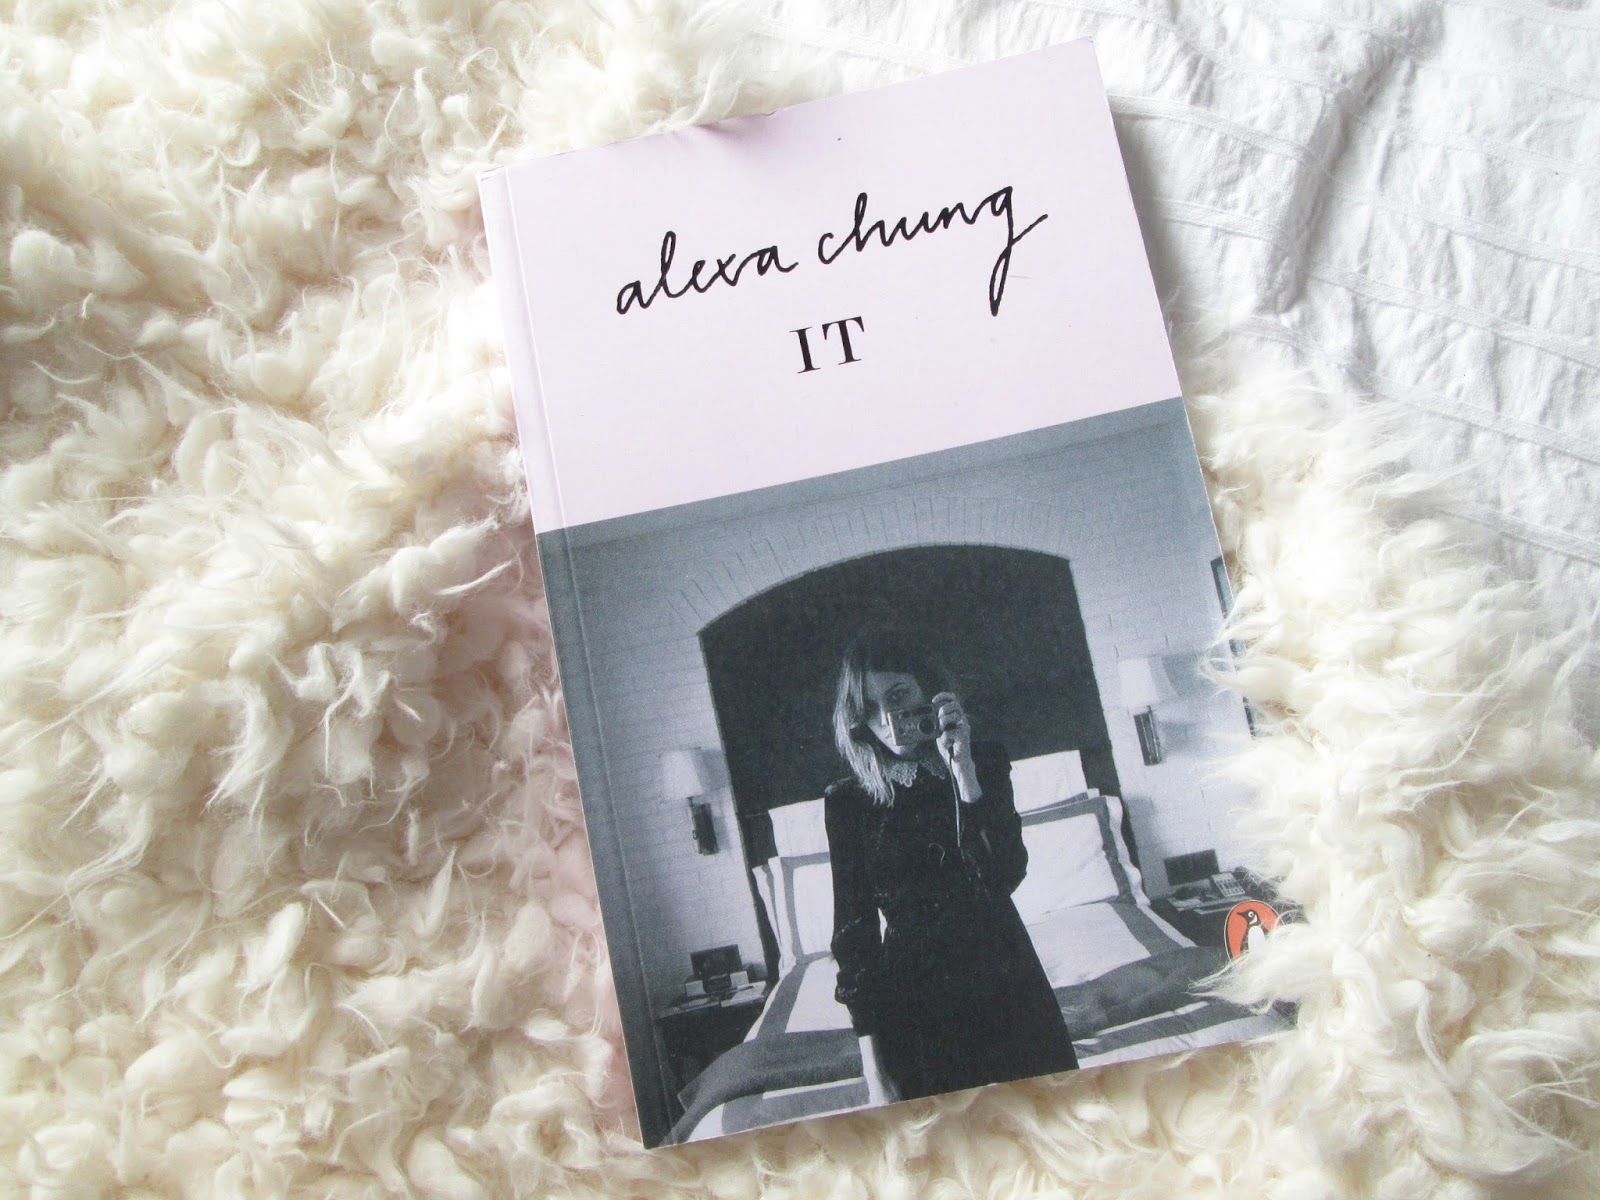 Book Club | Alexa Chung IT - Beyond Imagination